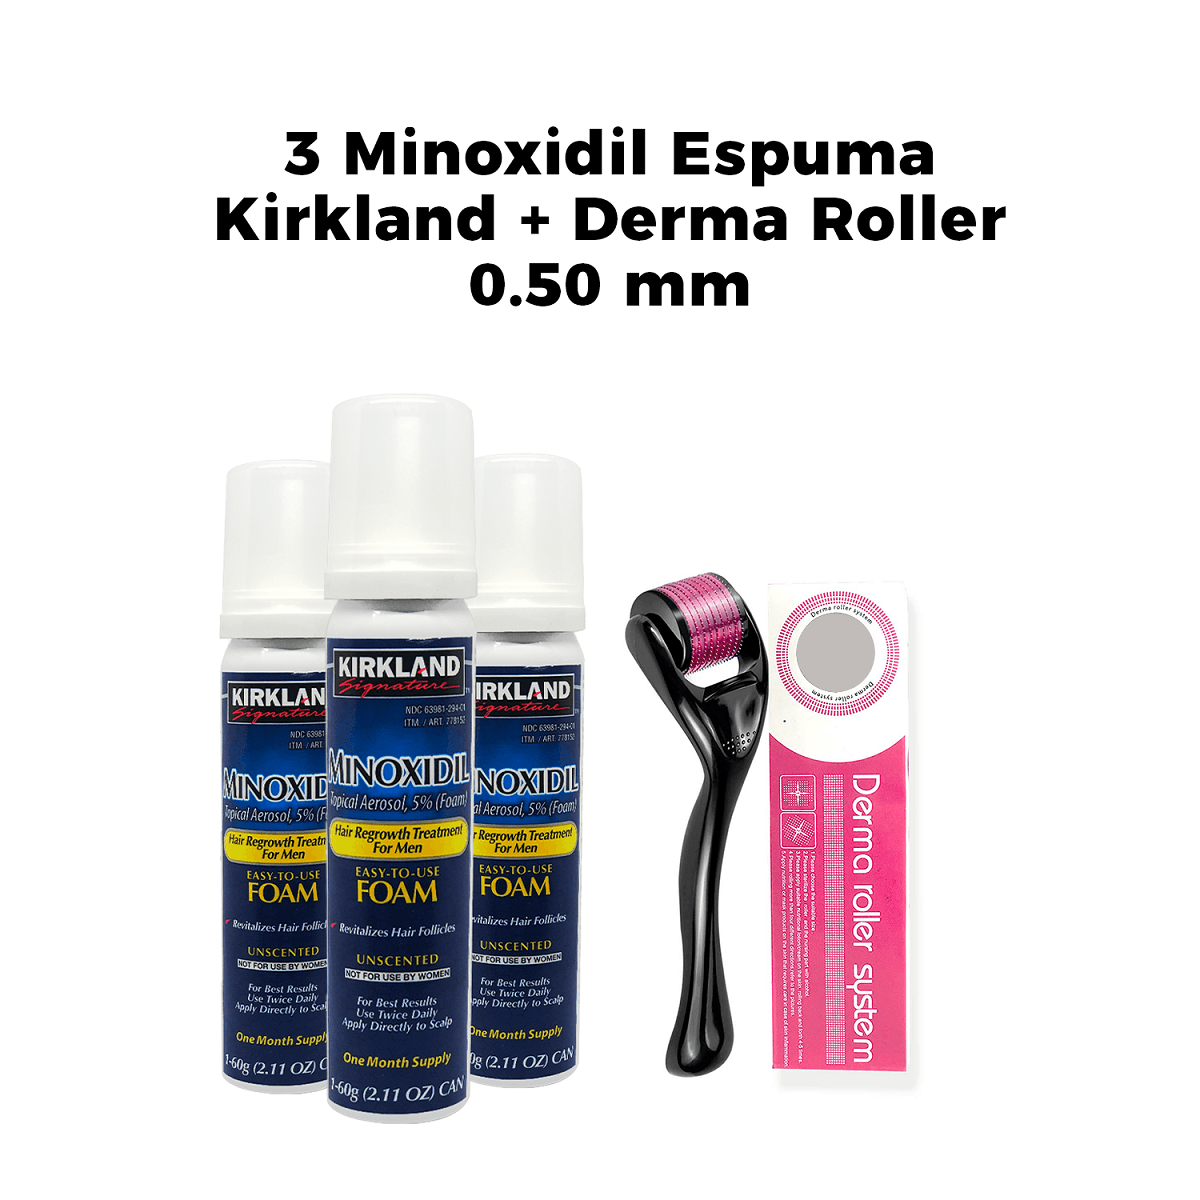 Minoxidil Espuma Kirkland 3 Uni + Derma Roller 0.50mm 1 Uni